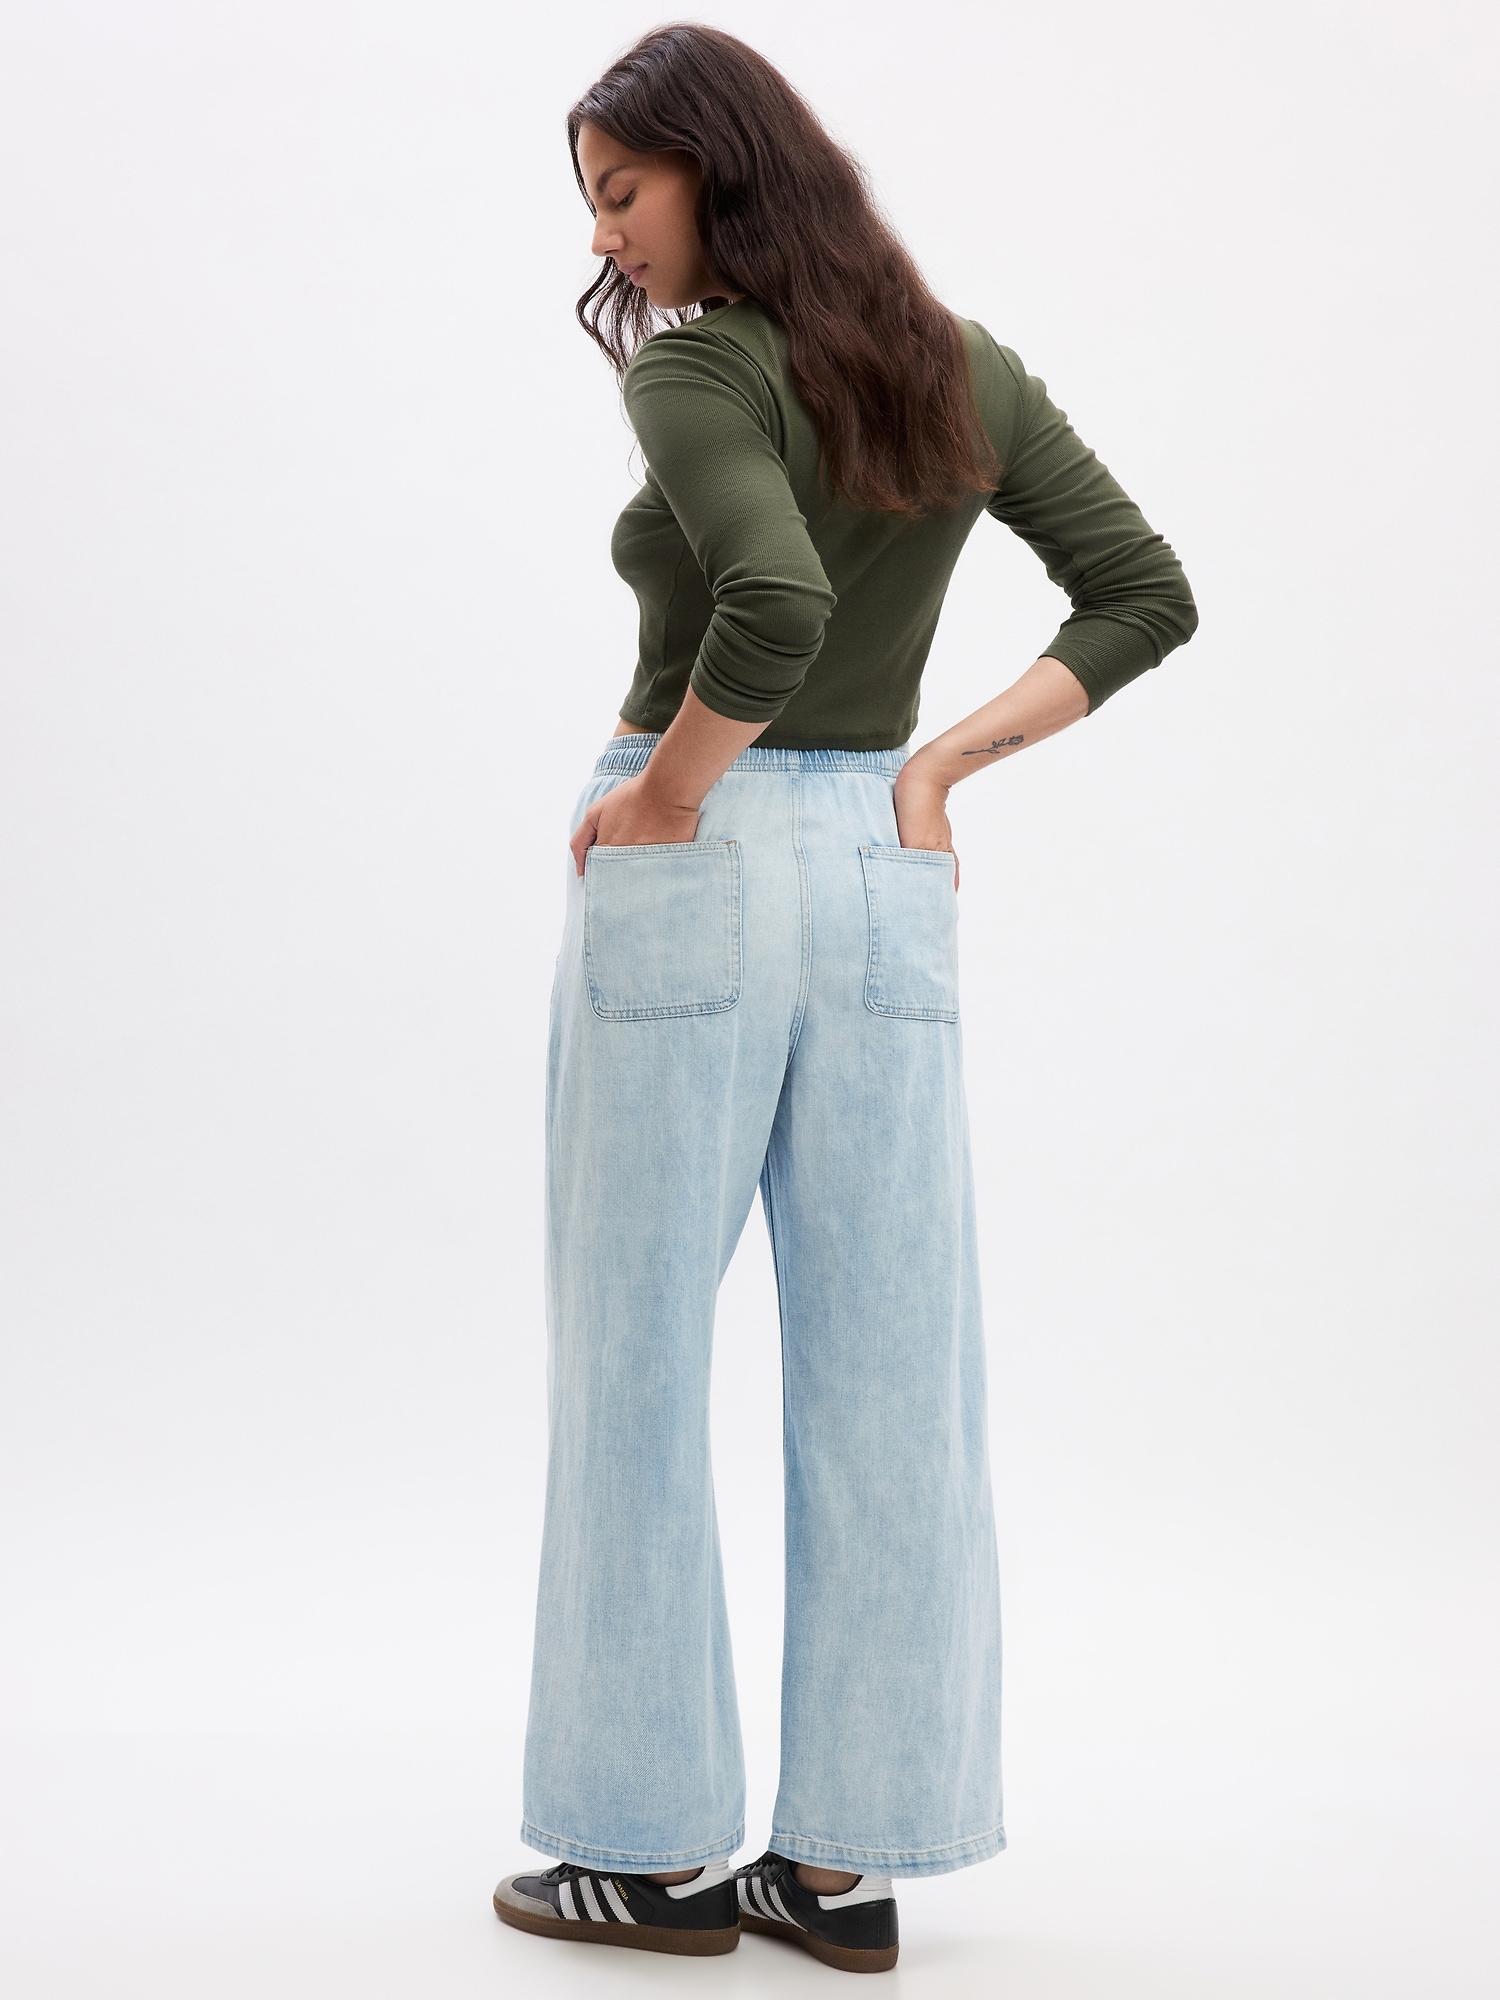 Avenue Blue Denim Pull On Jeans Elastic Back Front Rear Pockets 14/16 | eBay